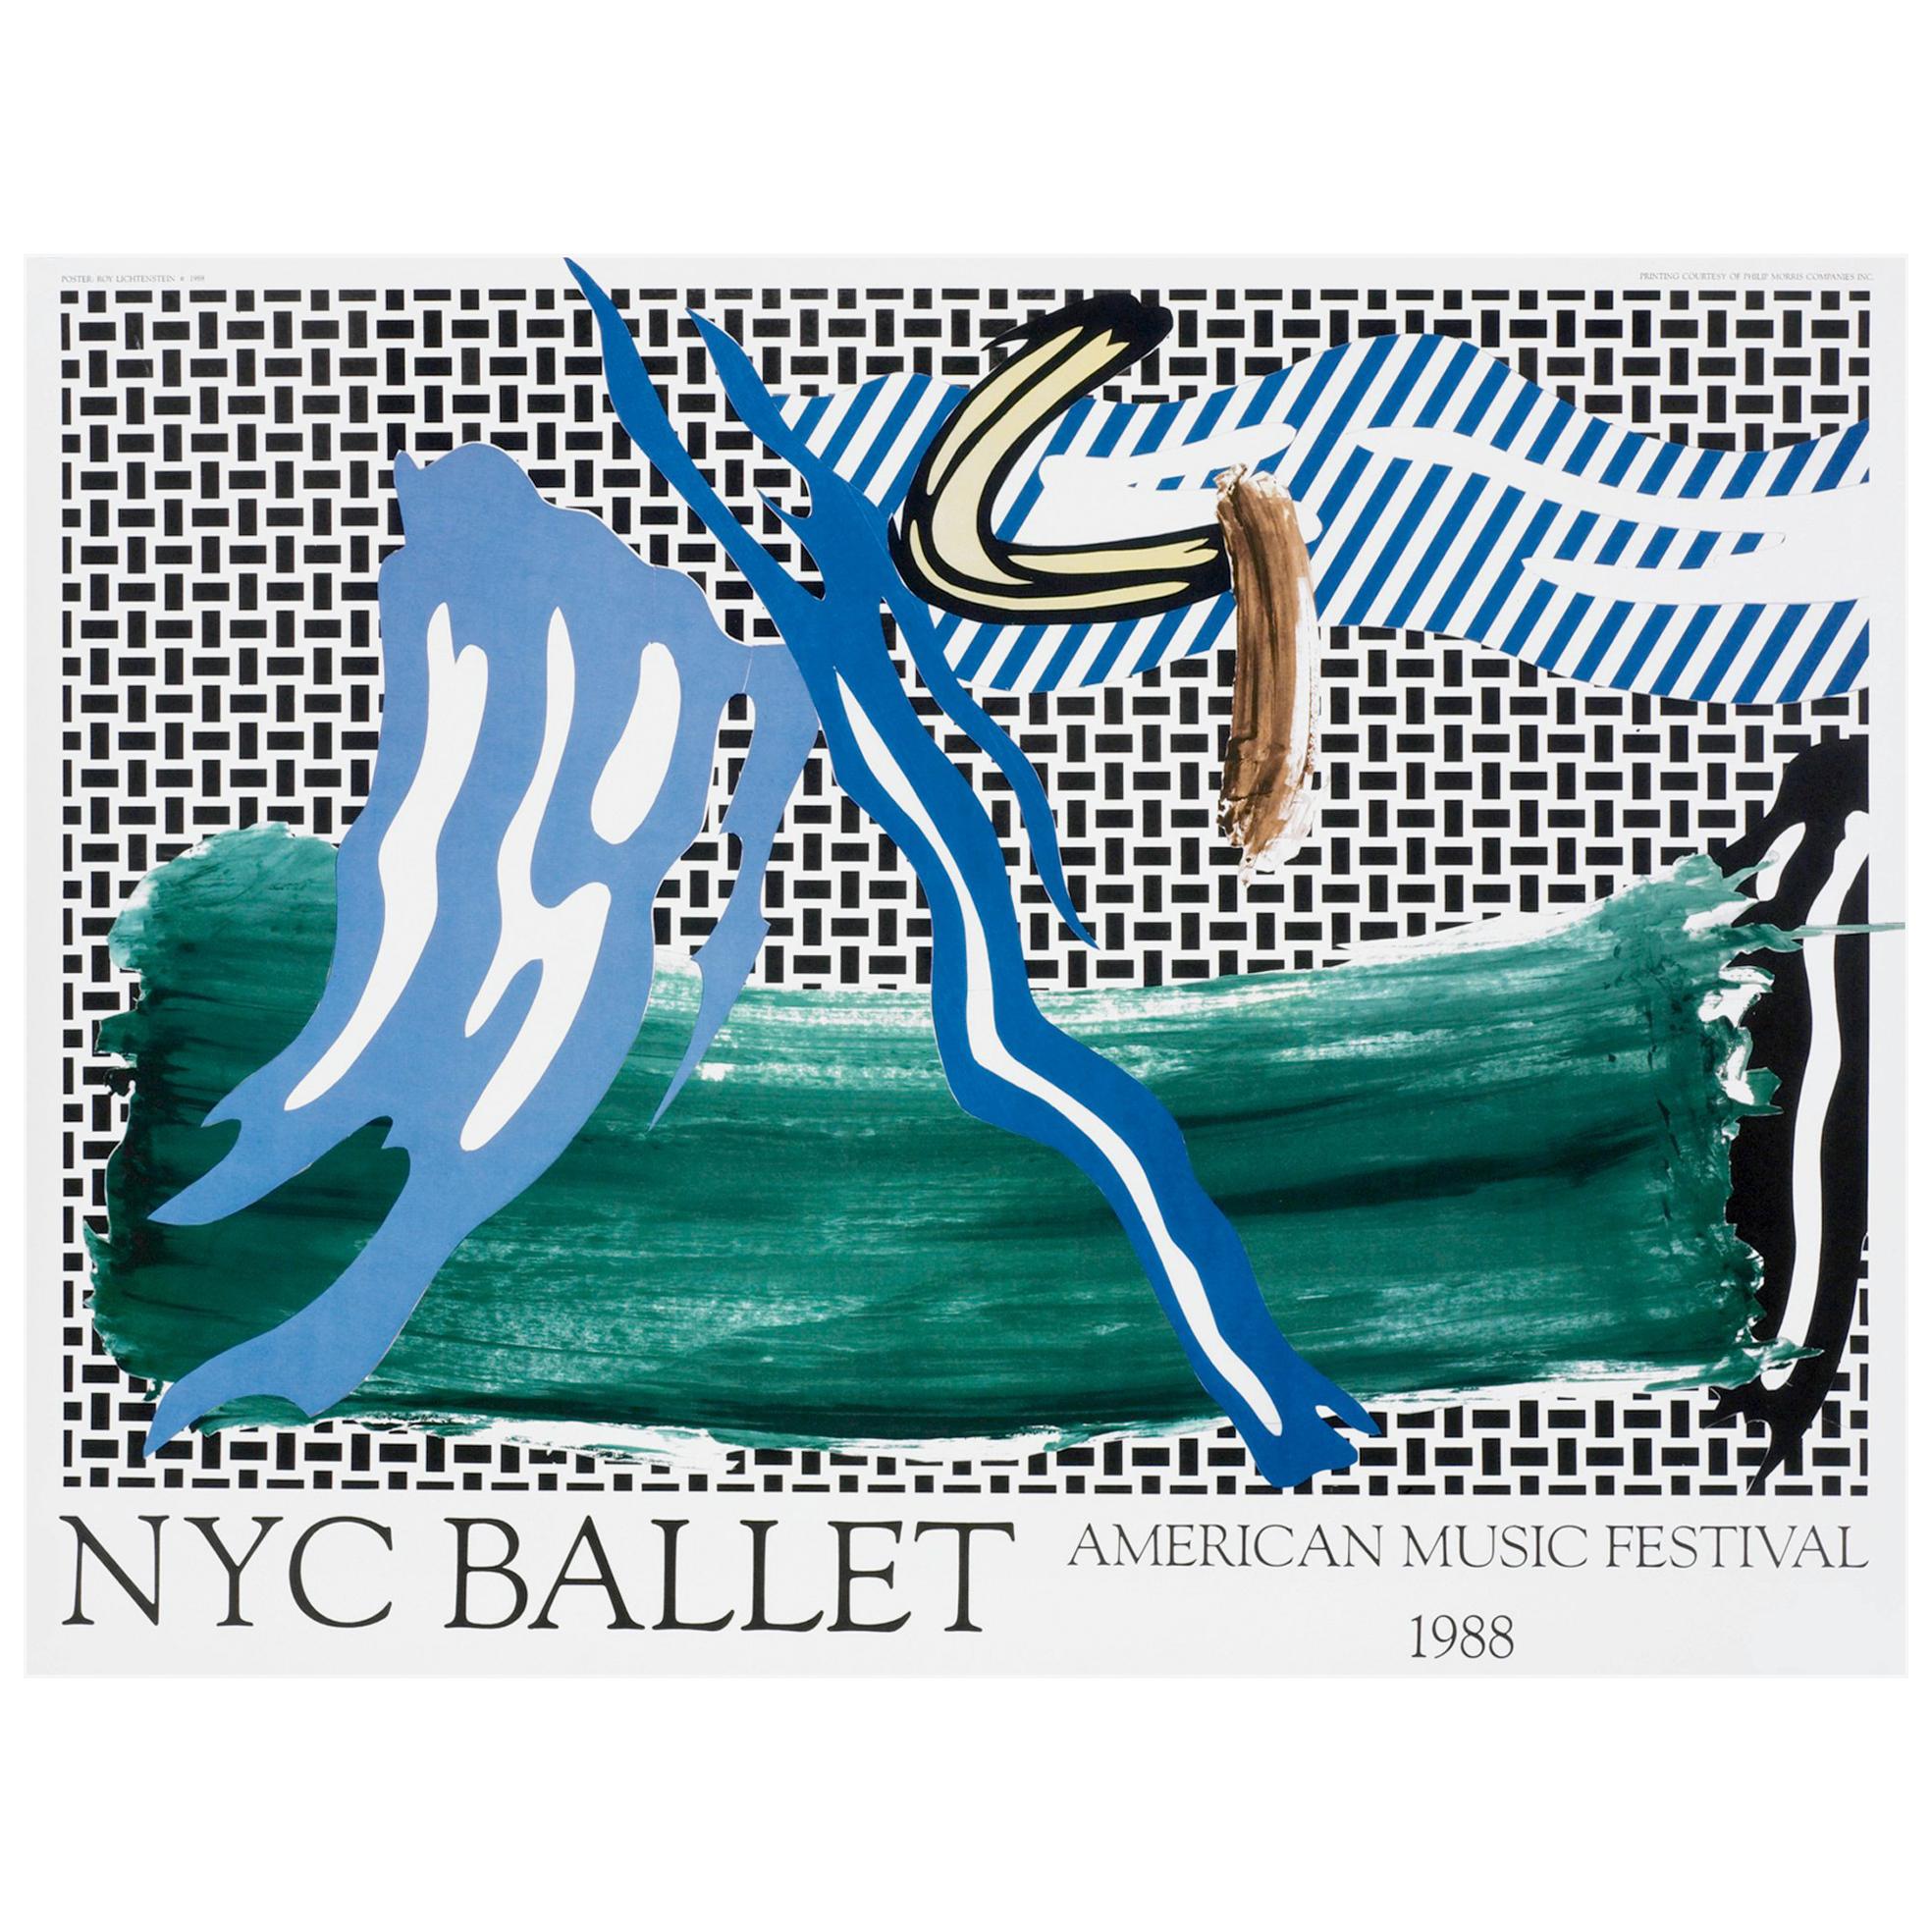 Roy Lichtenstein 'New York Ballet' Rare Original 1988 Poster Print on Wove Paper For Sale